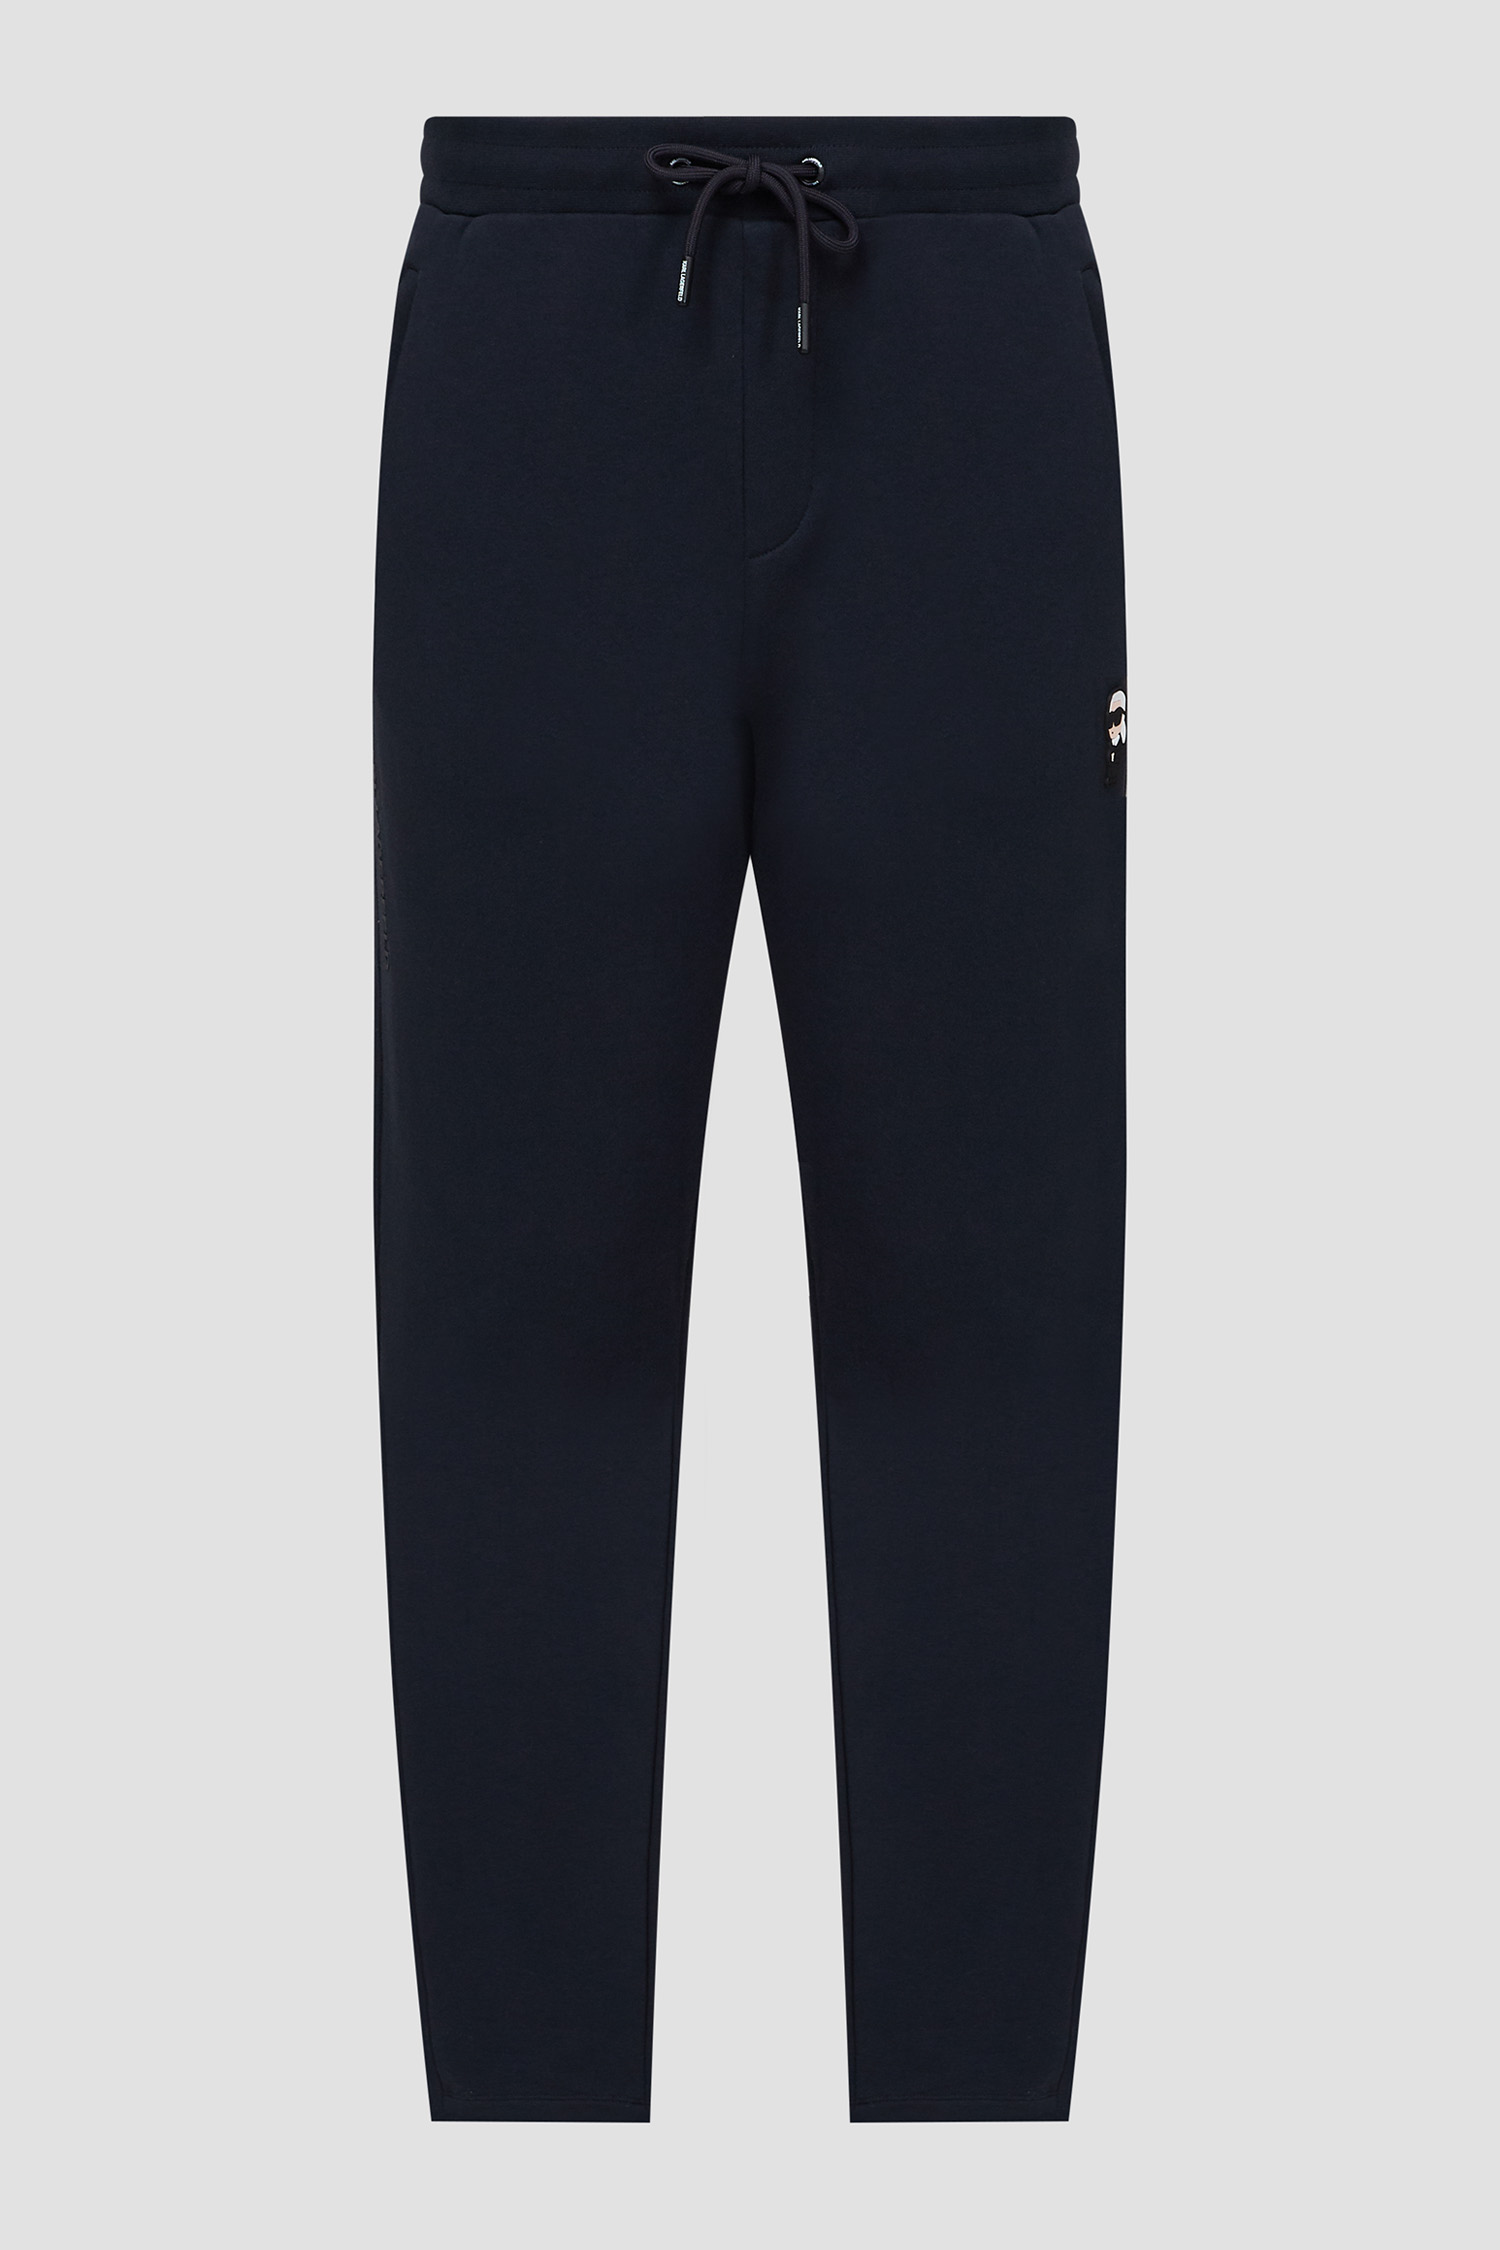 Мужские темно-синие спортивные брюки Karl Lagerfeld 532900.705045;690